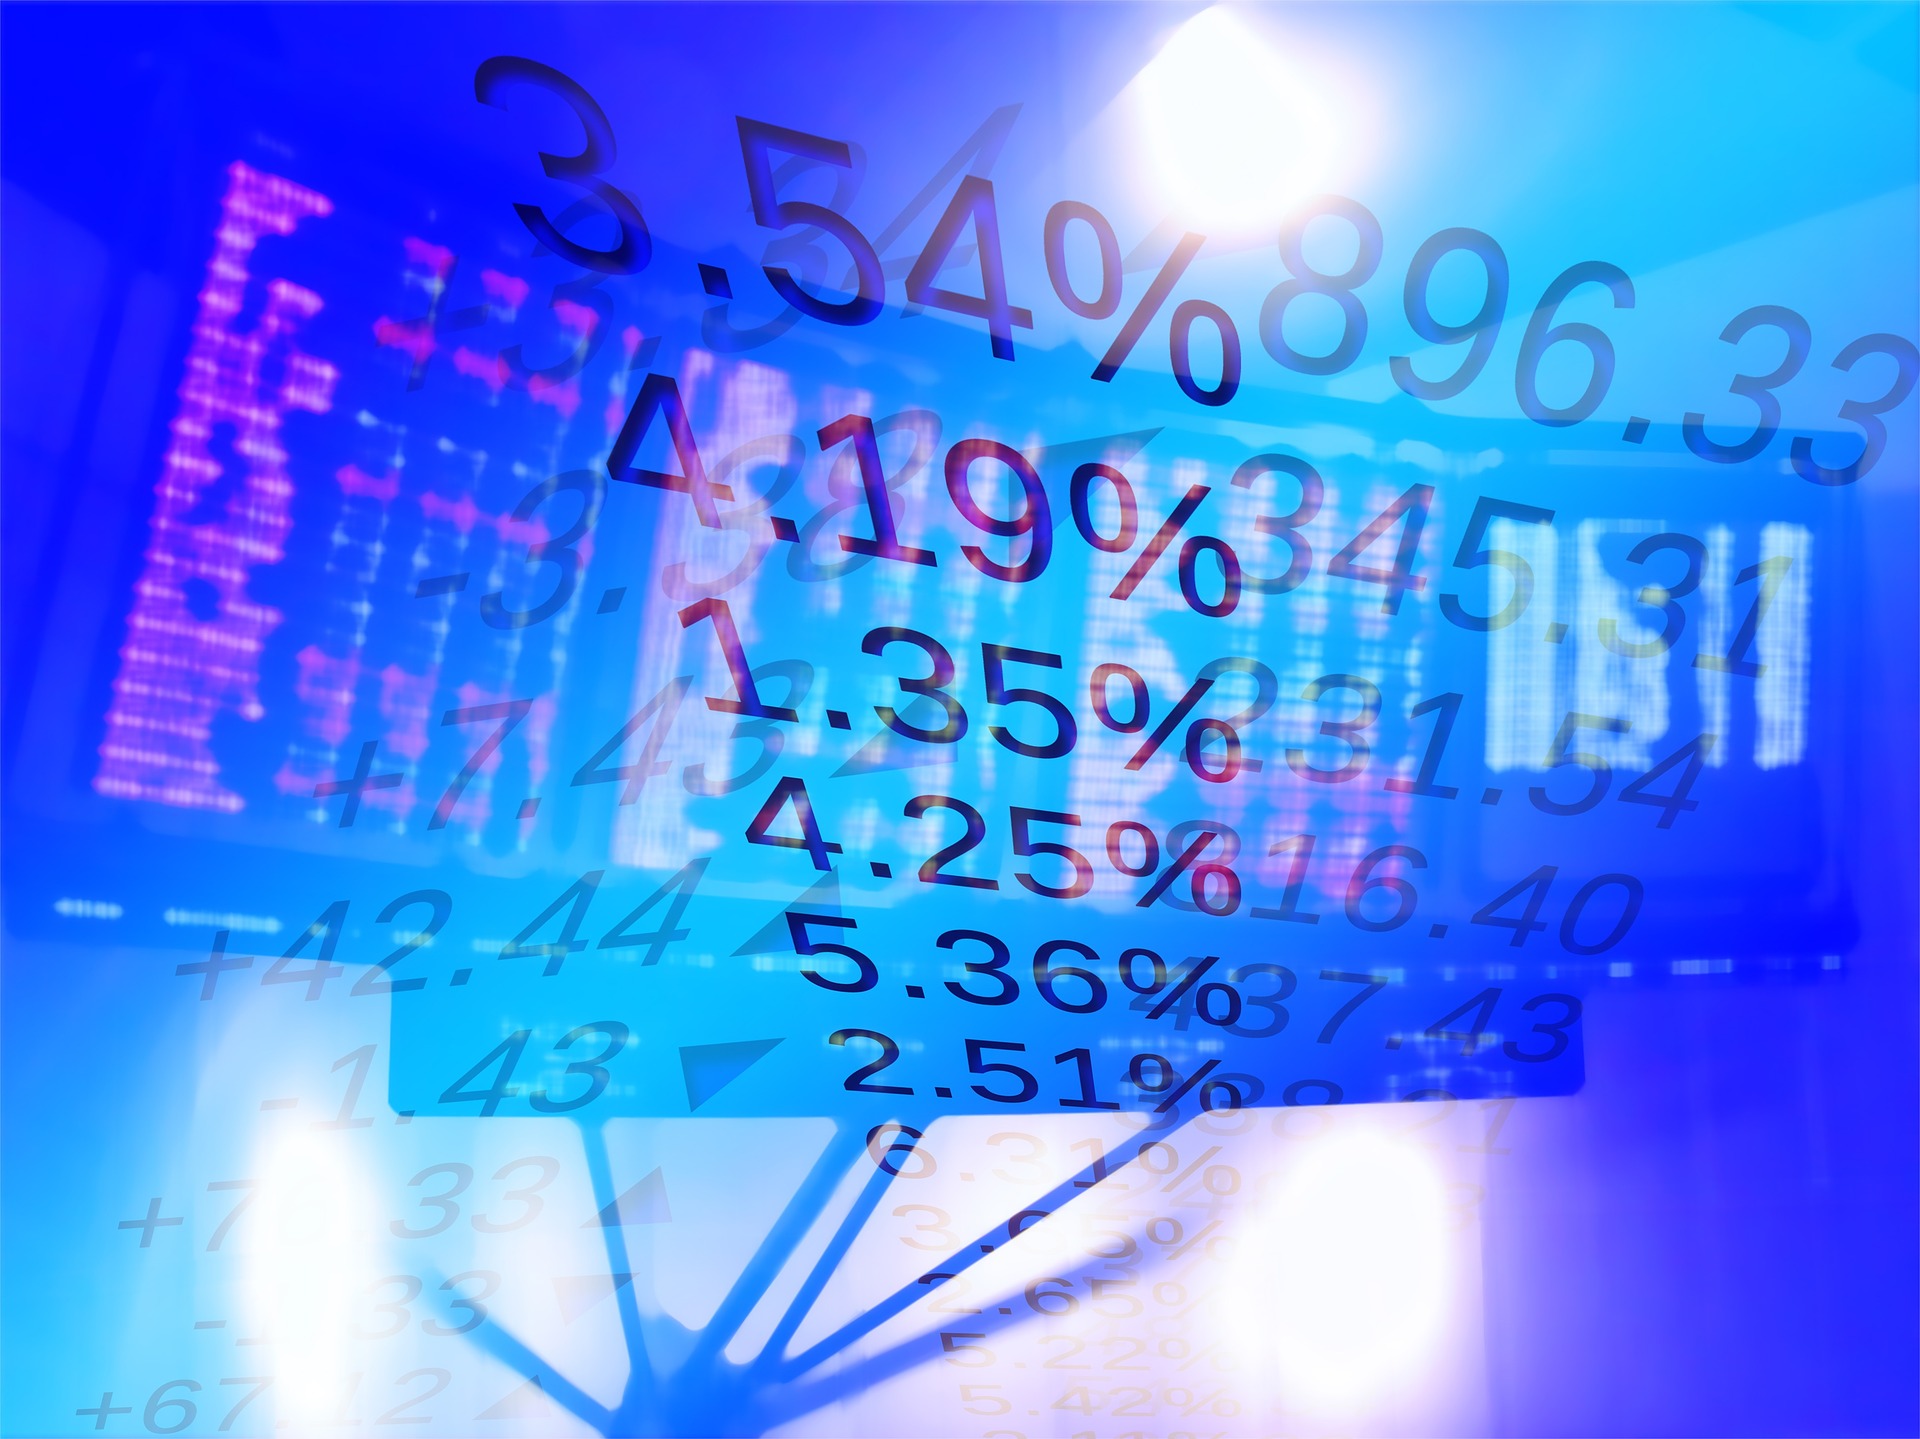 stock exchange with percentage increases overlay